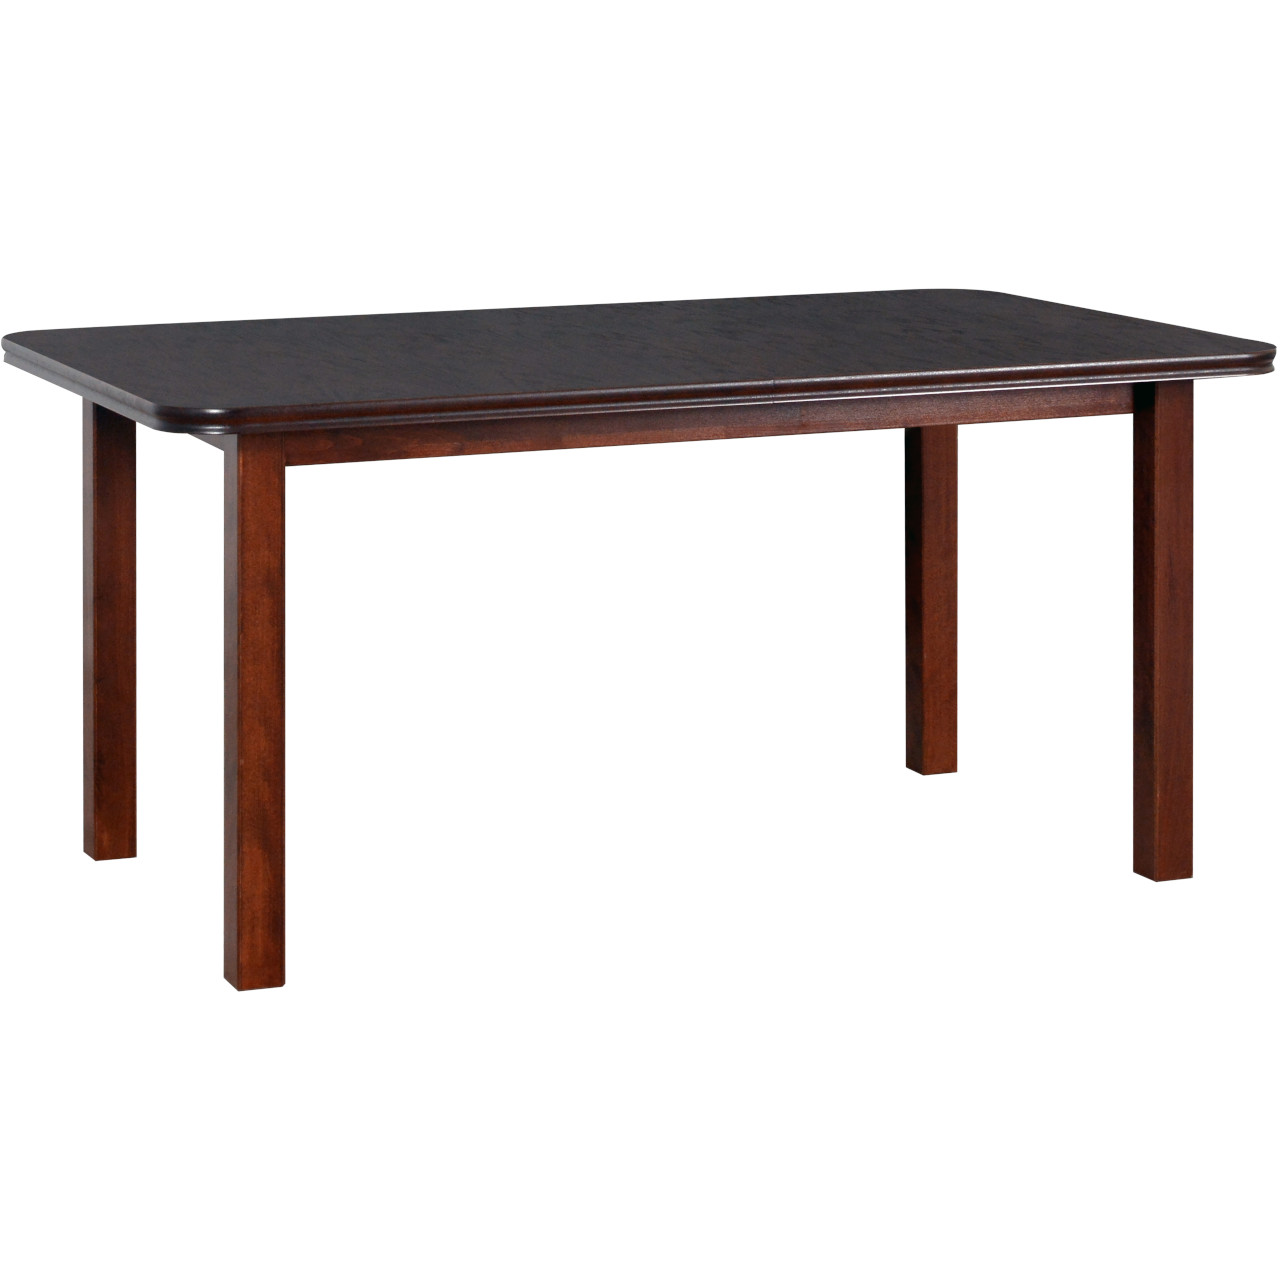 Stôl WENUS 5 L 90x160/240 orech, dubová dyha